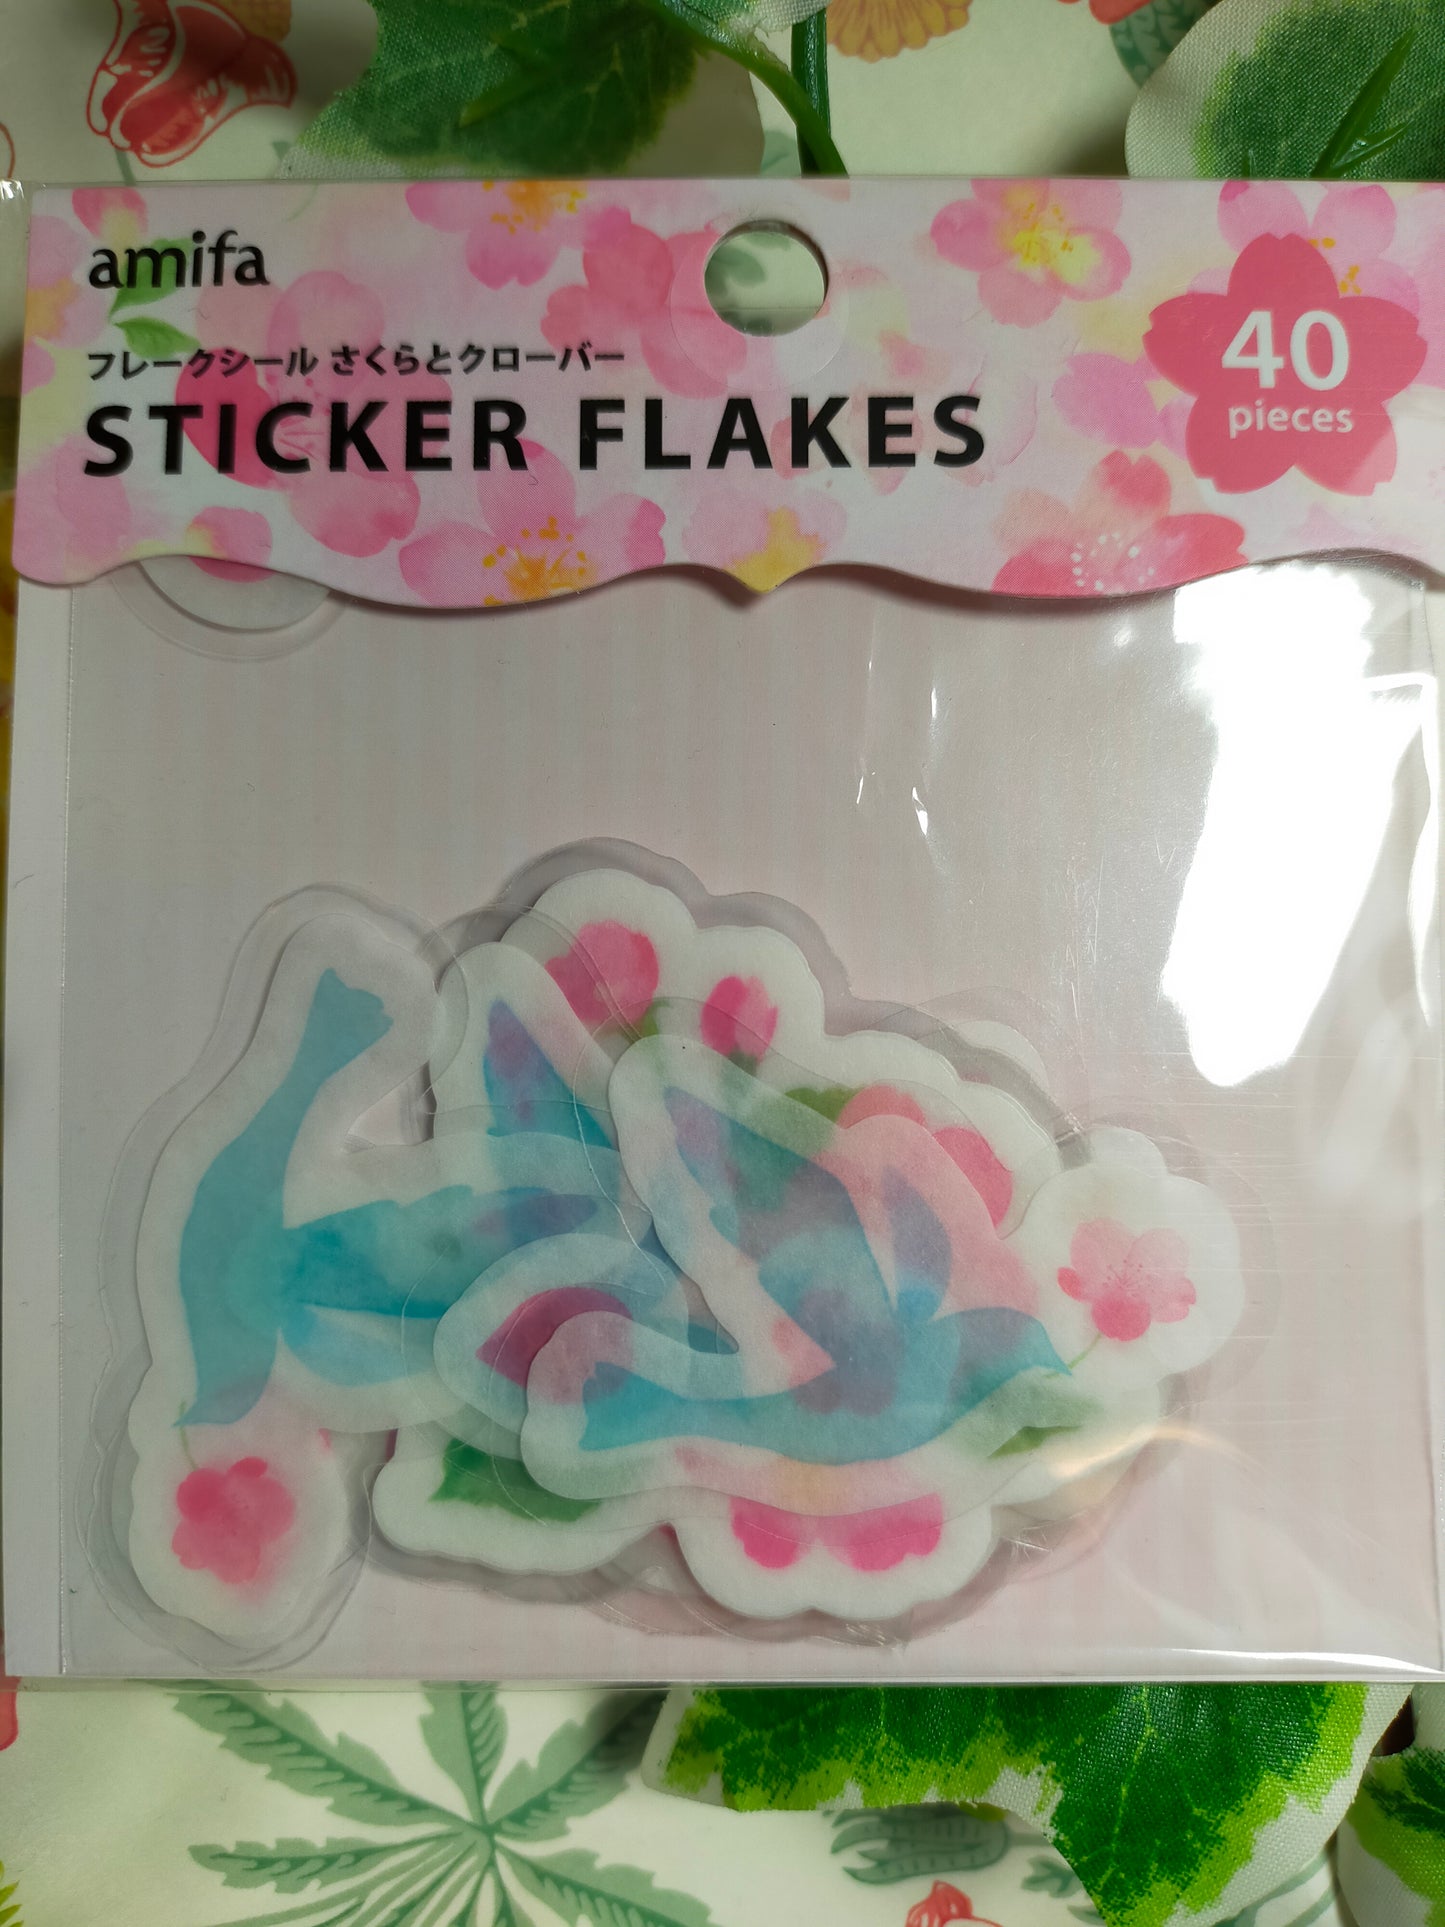 STICKER FLAKES Sakura and Clover 10designs*4pieces, amifa_ Pink / Green